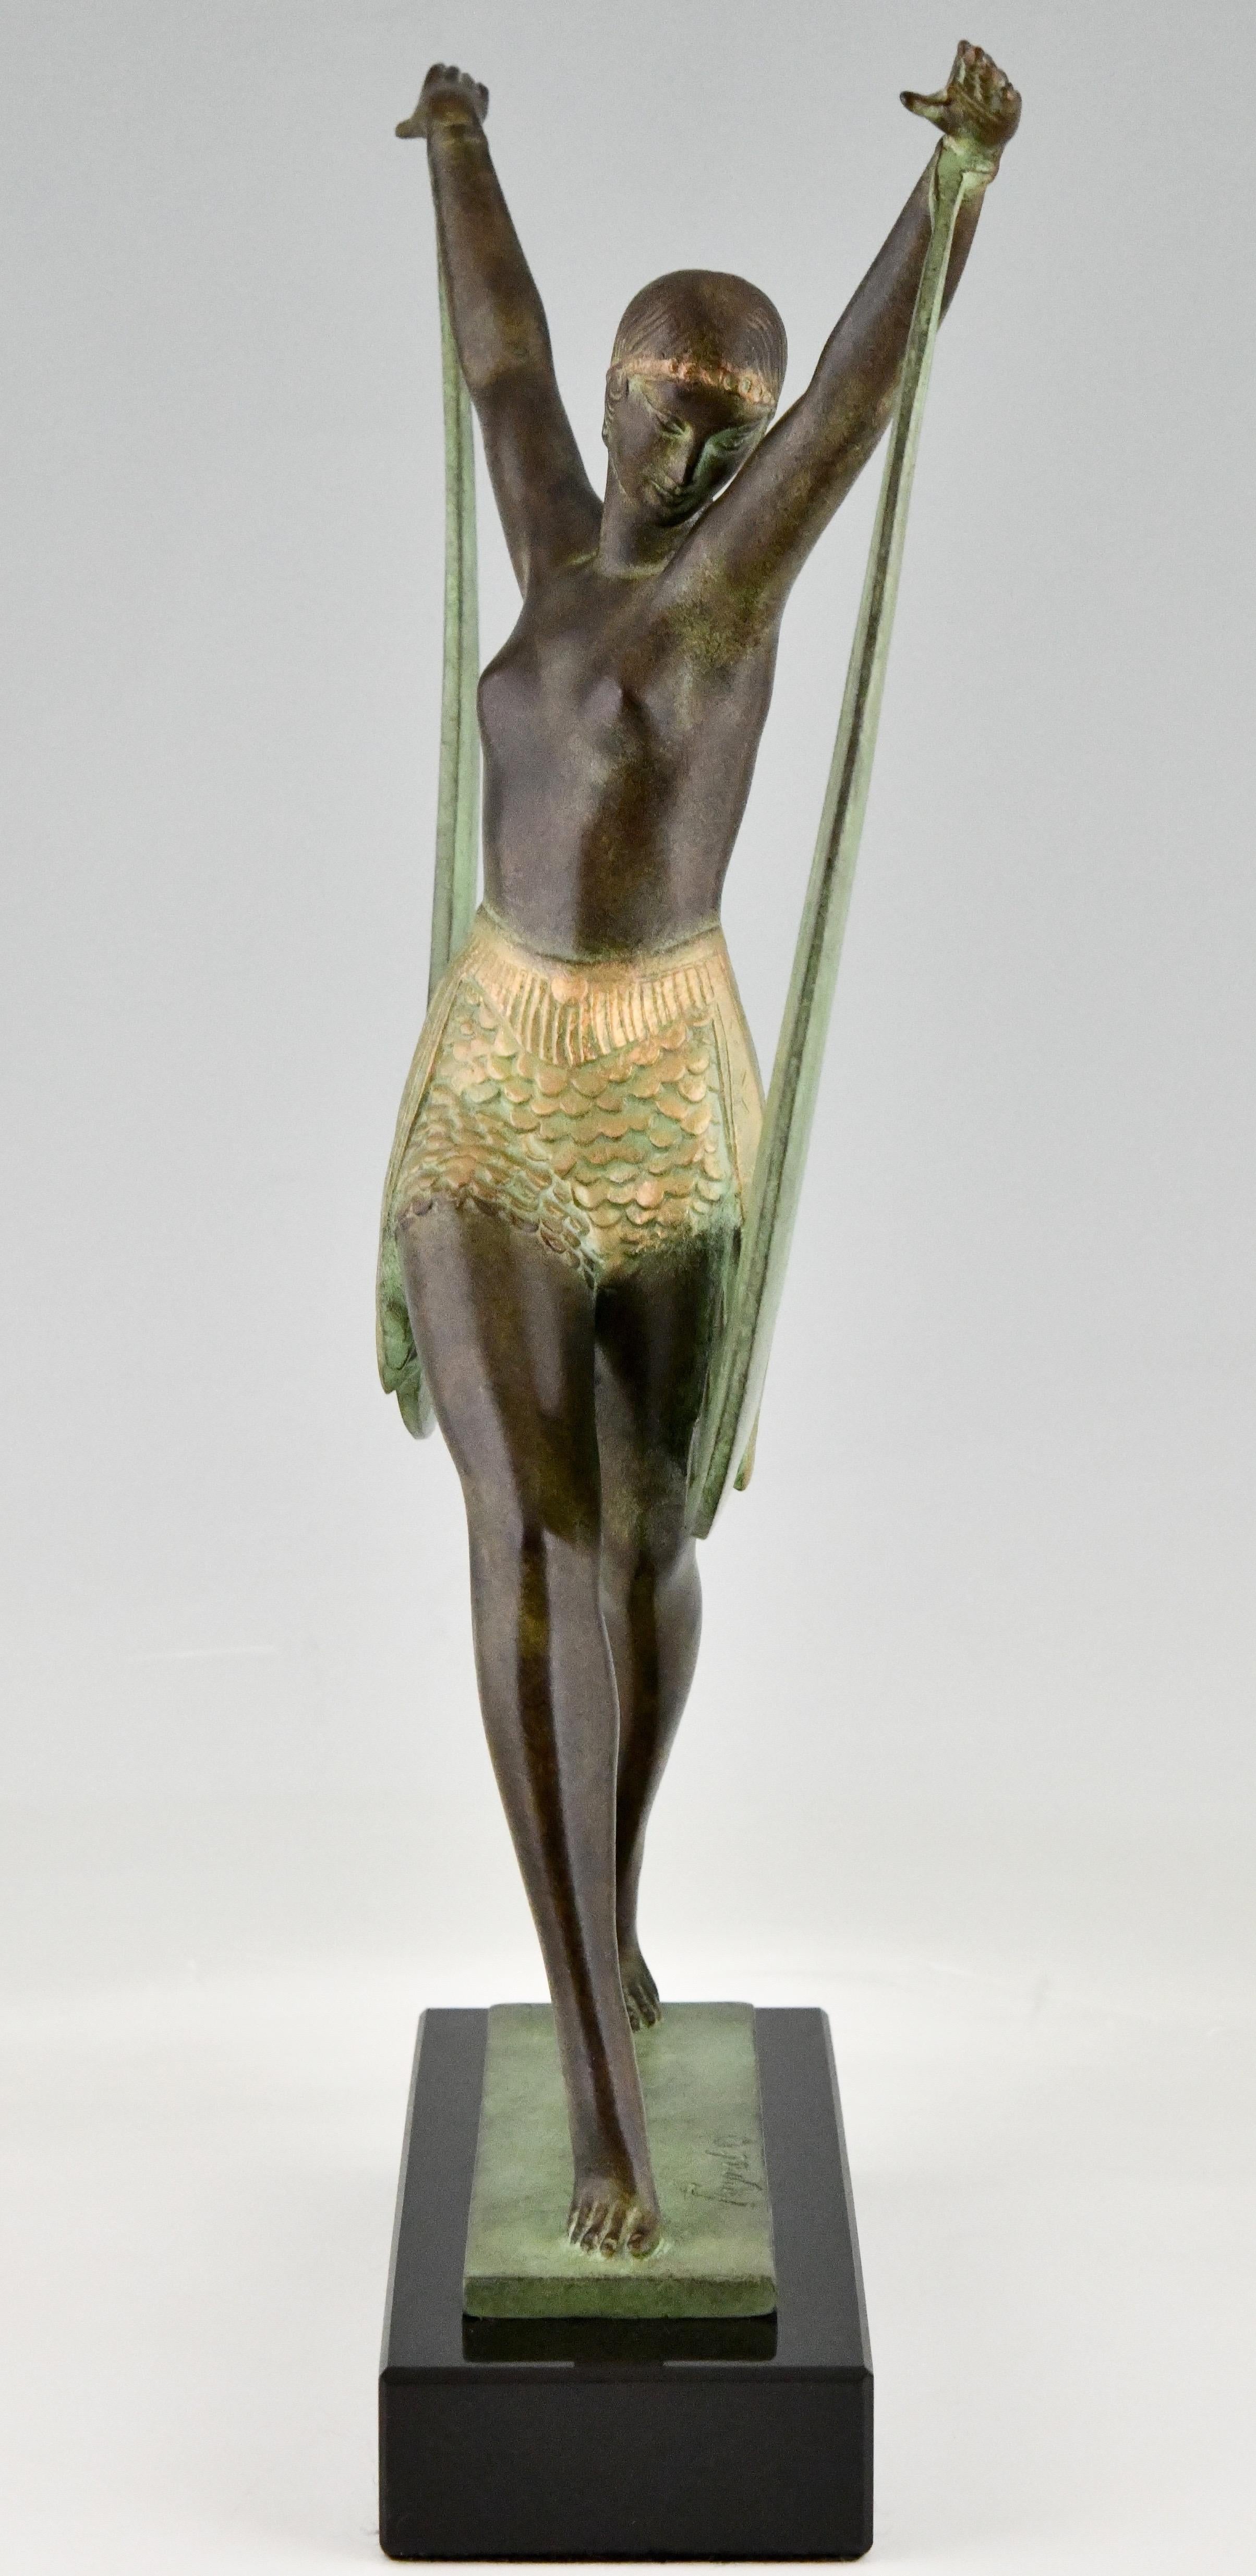 French Art Deco Style Sculpture of a Dancer Lysis, Pierre Le Faguays for Max Le Verrier